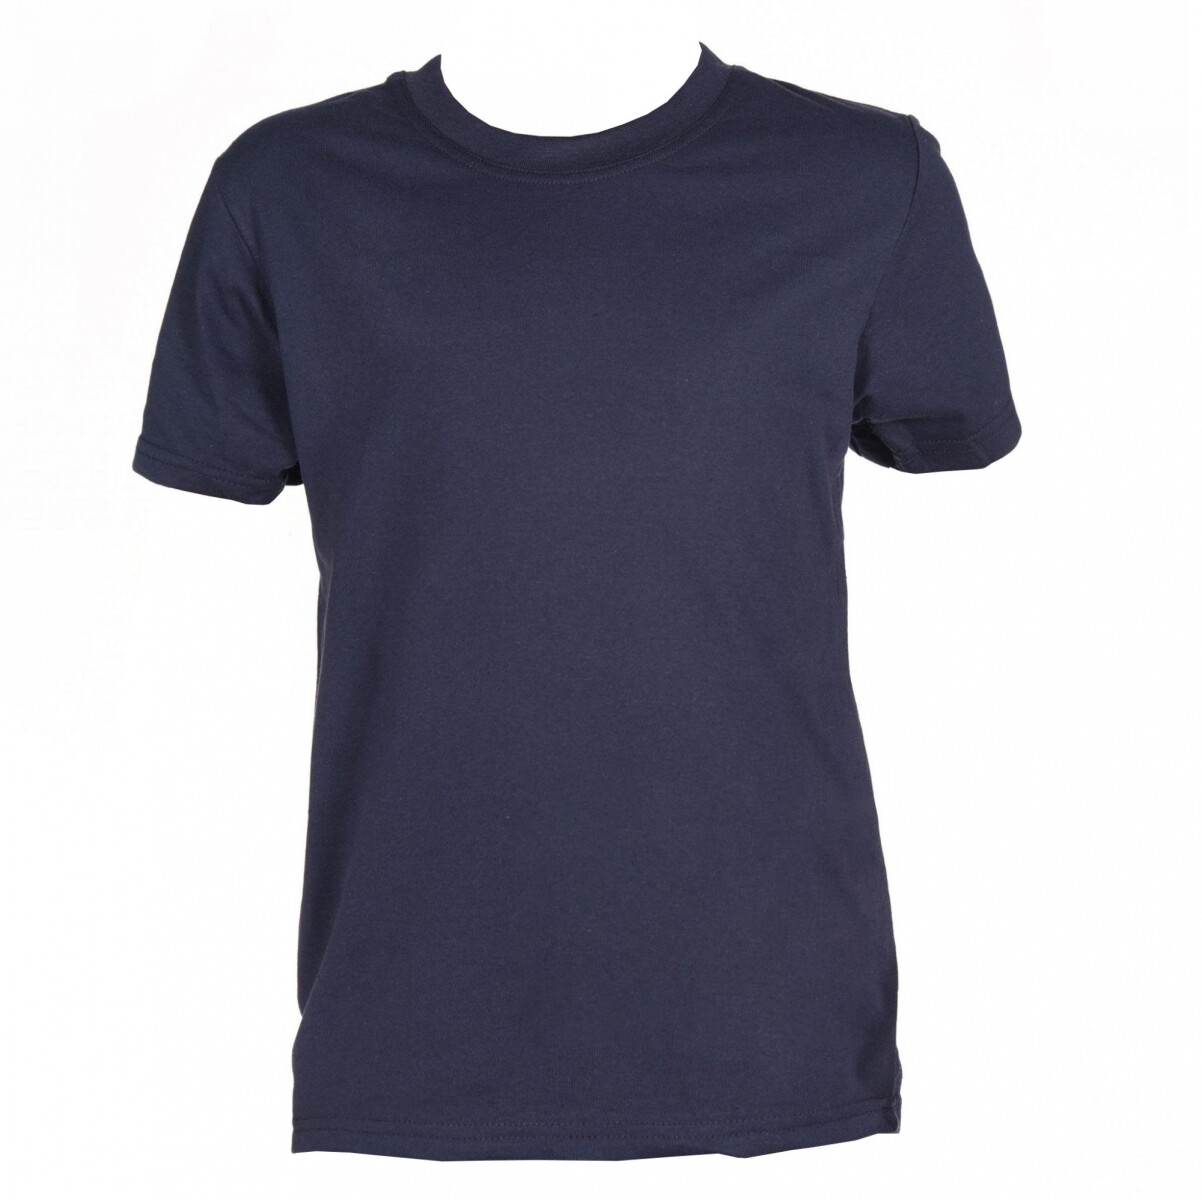 Camiseta Classic Niños - Azul marino 